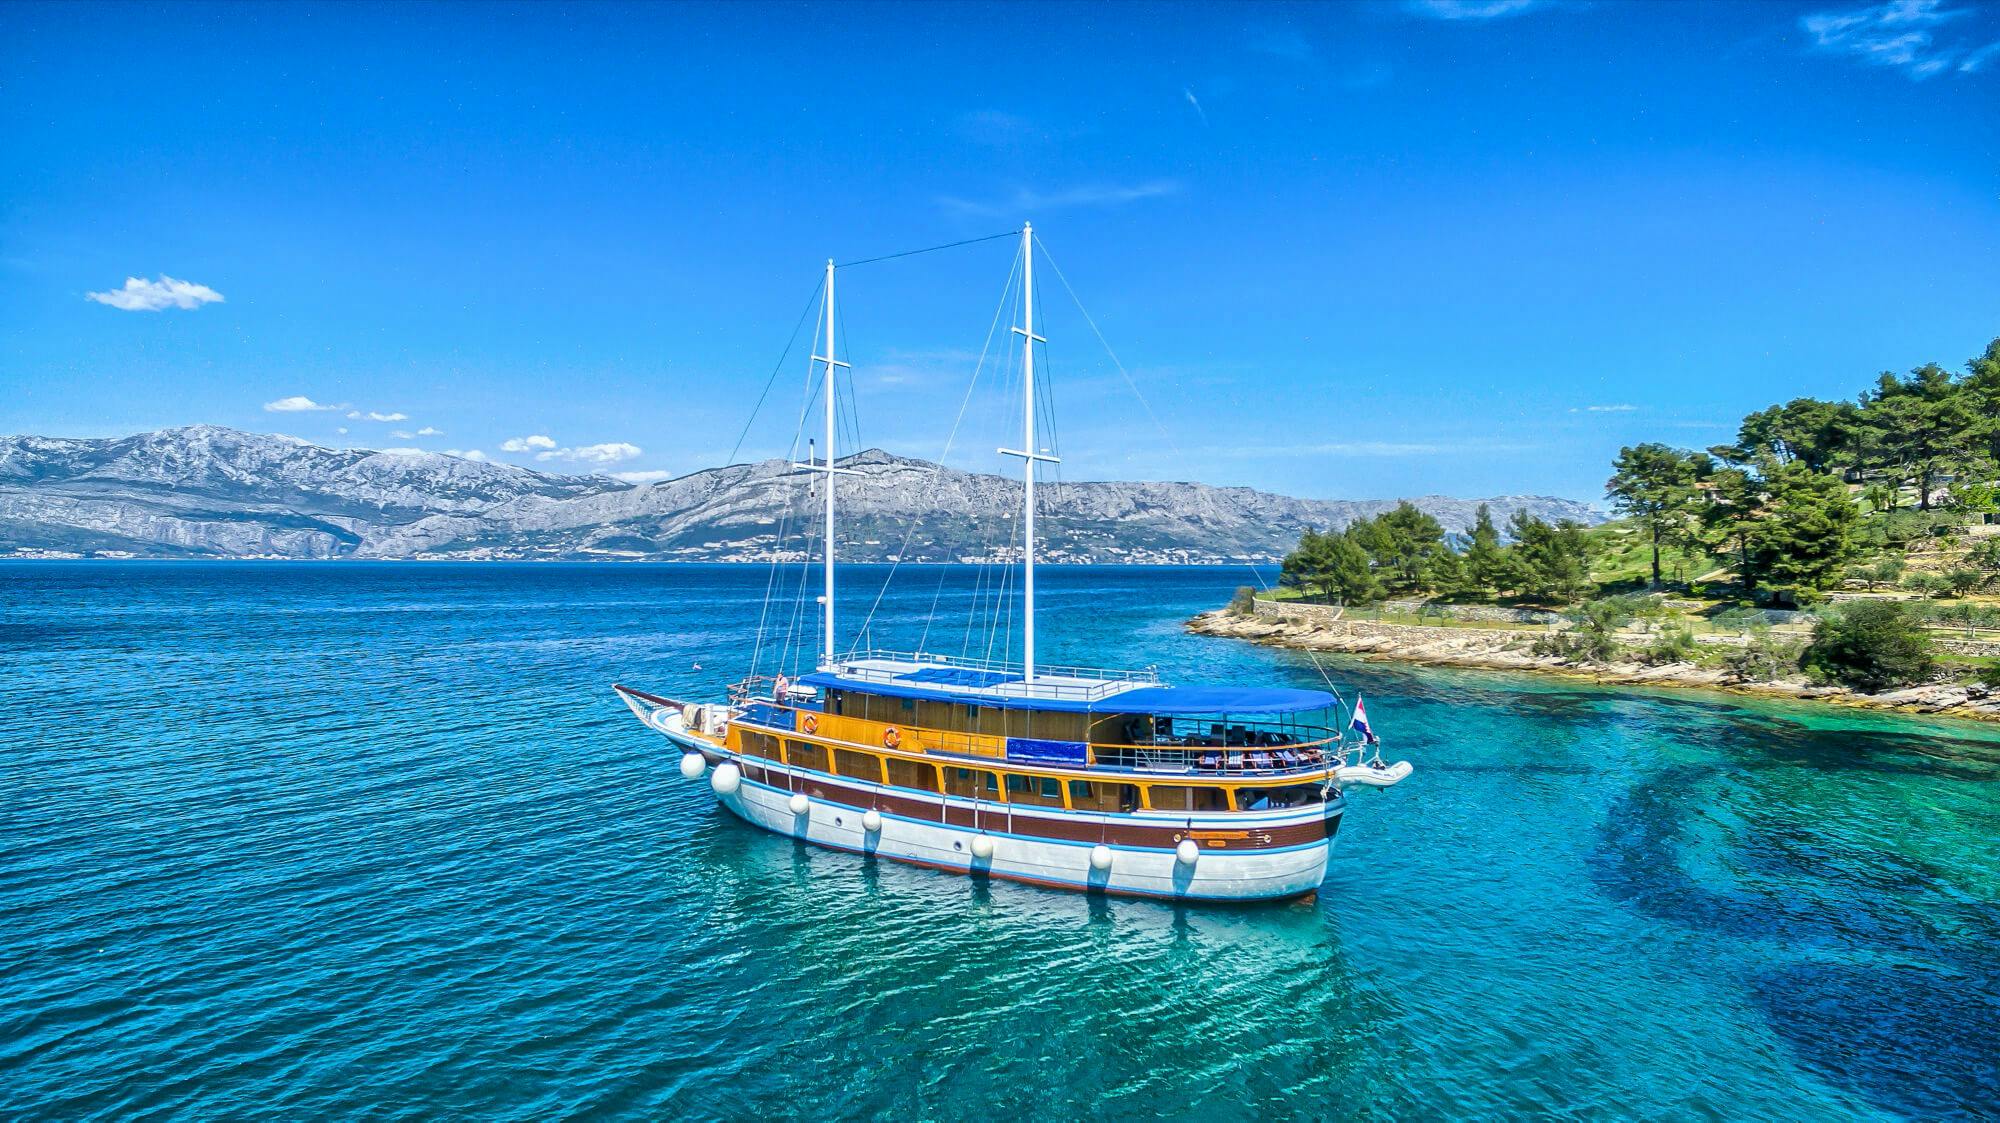 Dalmatia - South Bike and Boat